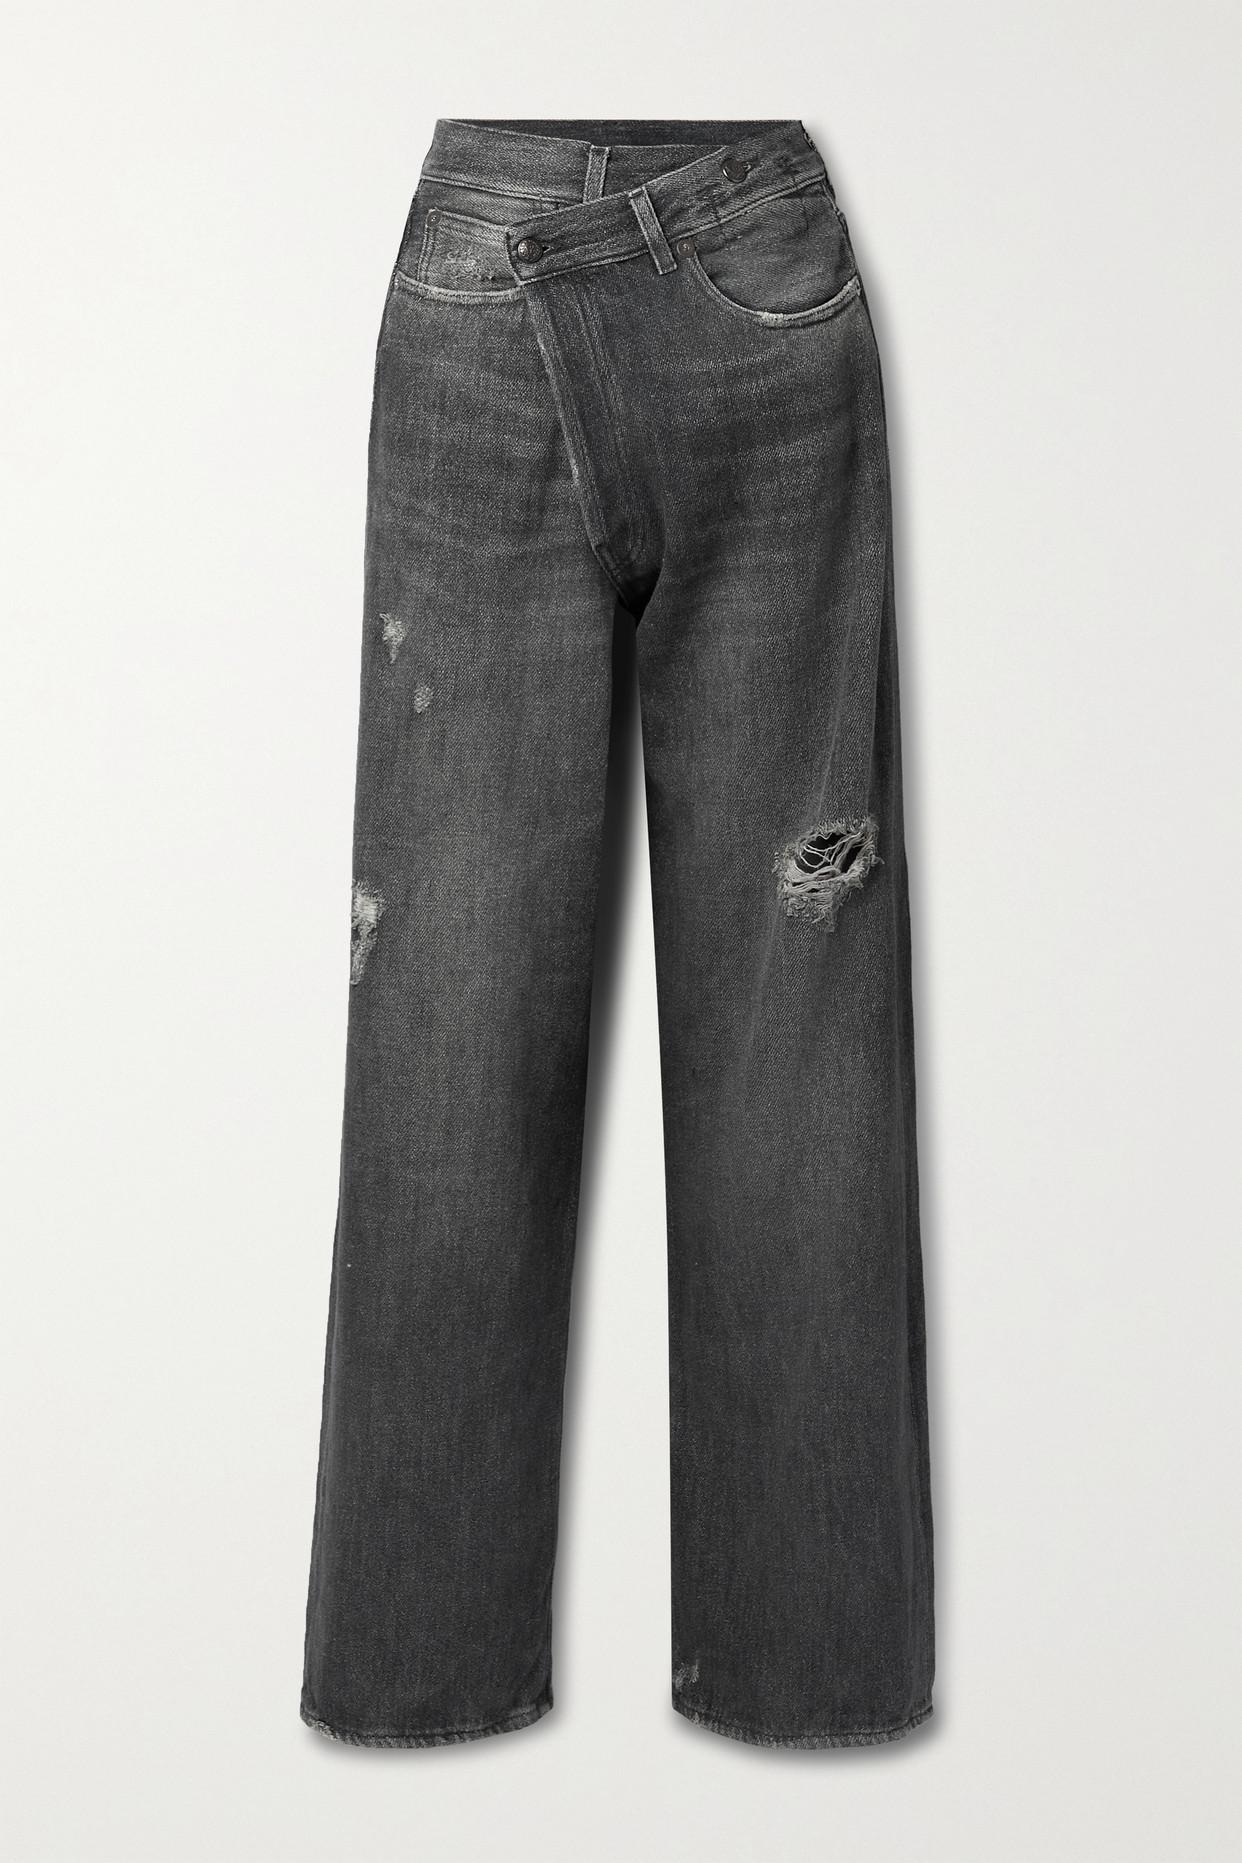 R13 Denim Crossover Asymmetric Distressed Jeans in Black (Gray) | Lyst